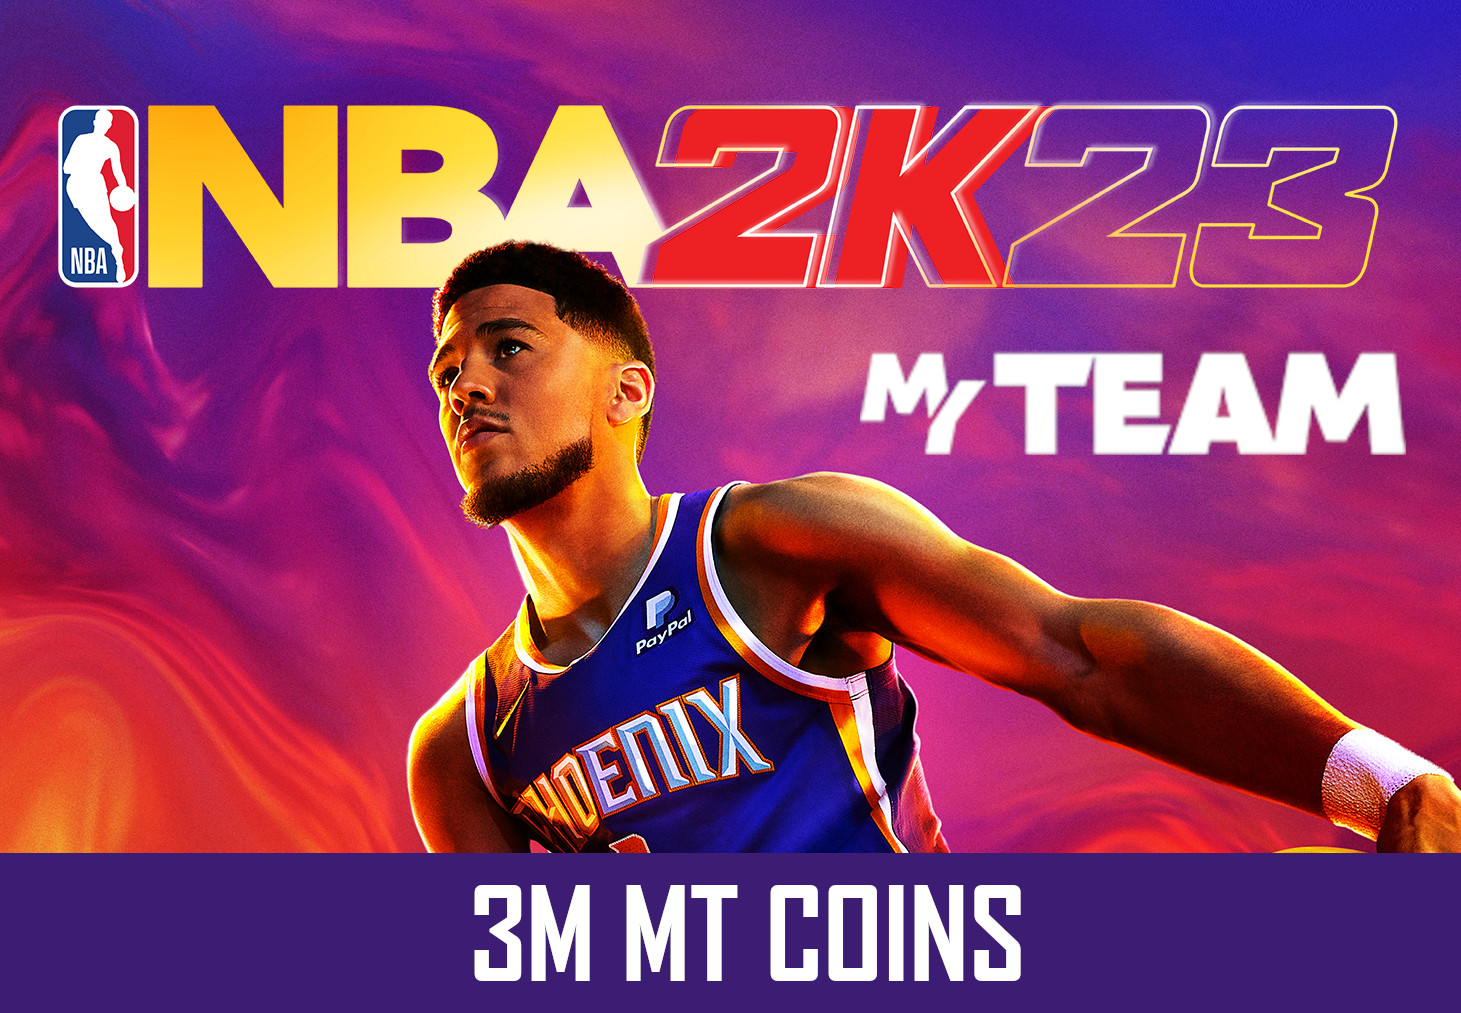 NBA 2K23 - 3M MT Coins - GLOBAL XBOX One/Series X,S